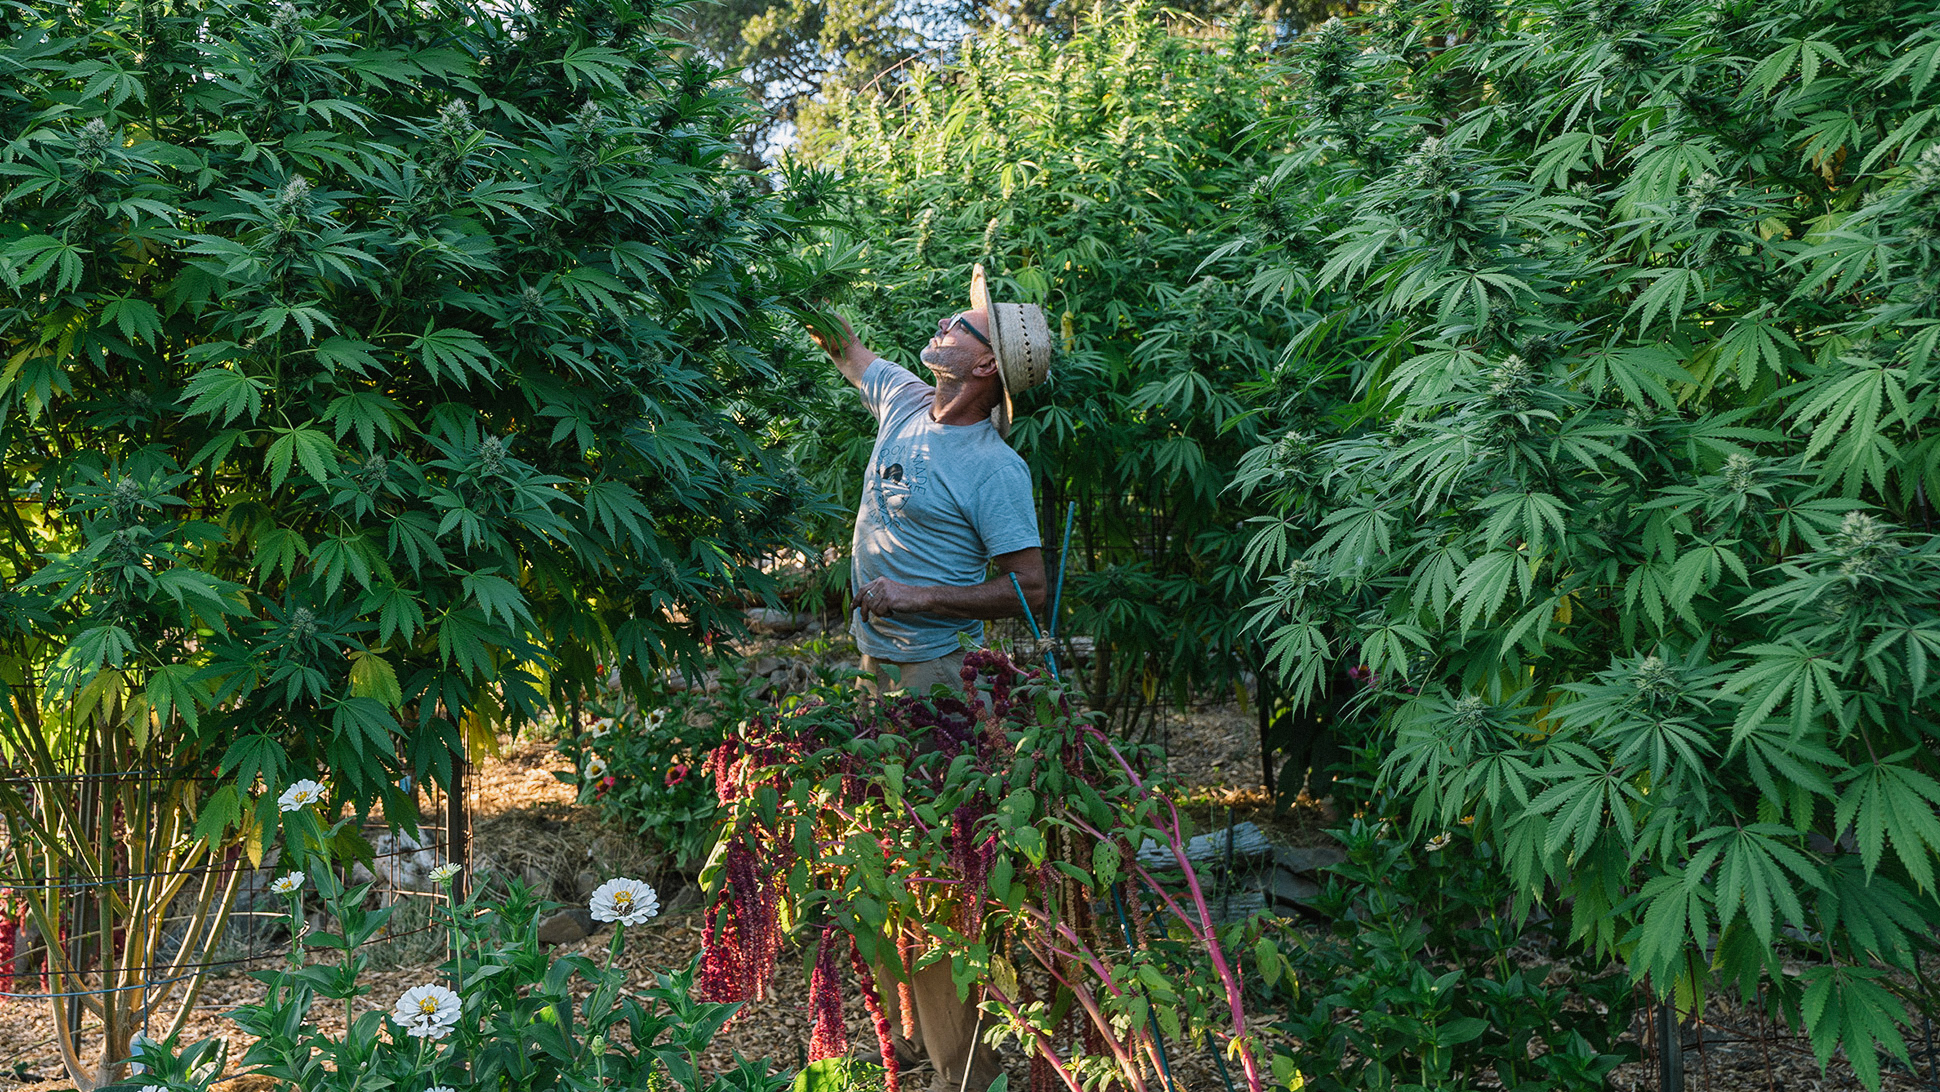 Smokable Plants You Can Grow That Aren't Marijuana Part 2 - Modern Farmer